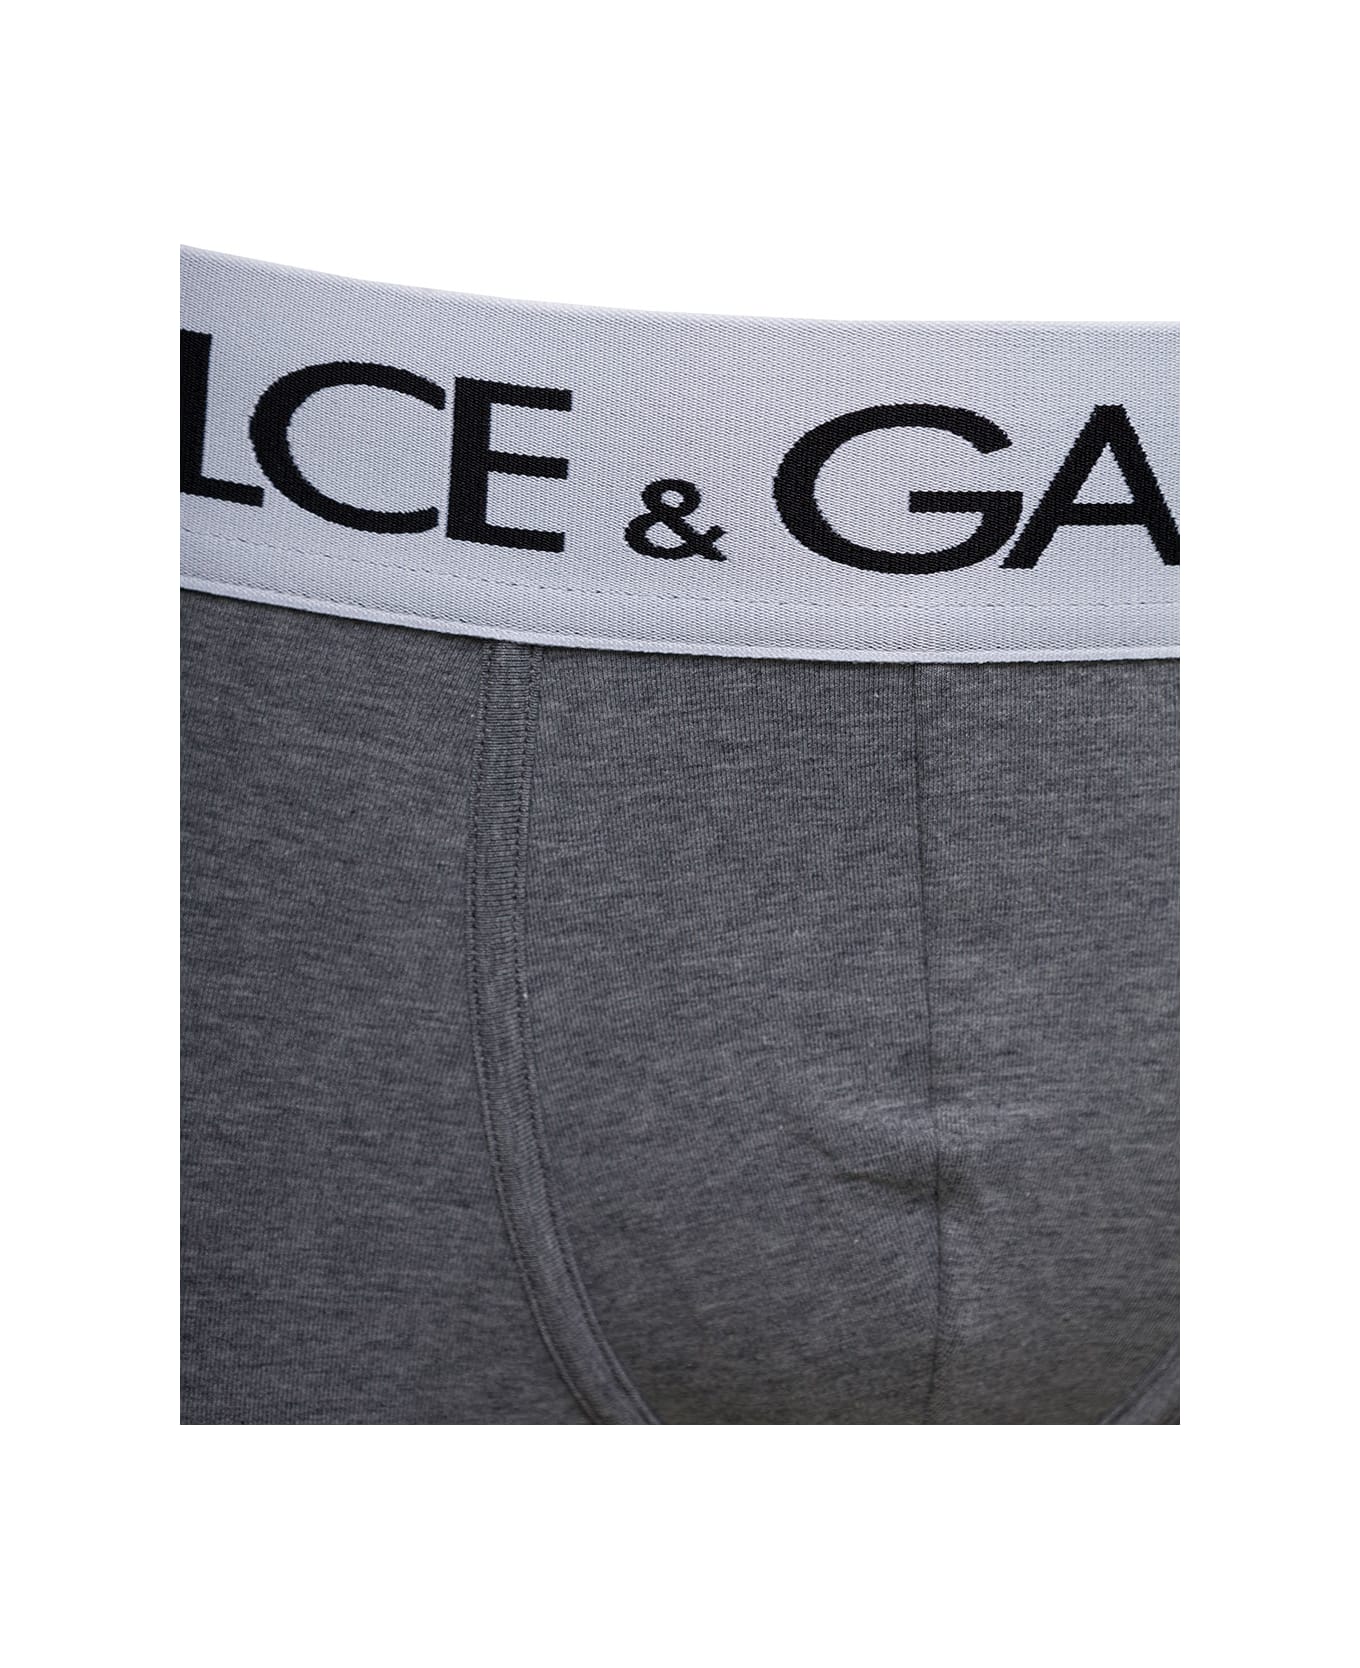 Dolce & Gabbana Grey Boxer Briefs With Branded Waistband In Stretch Cotton Man - Grey